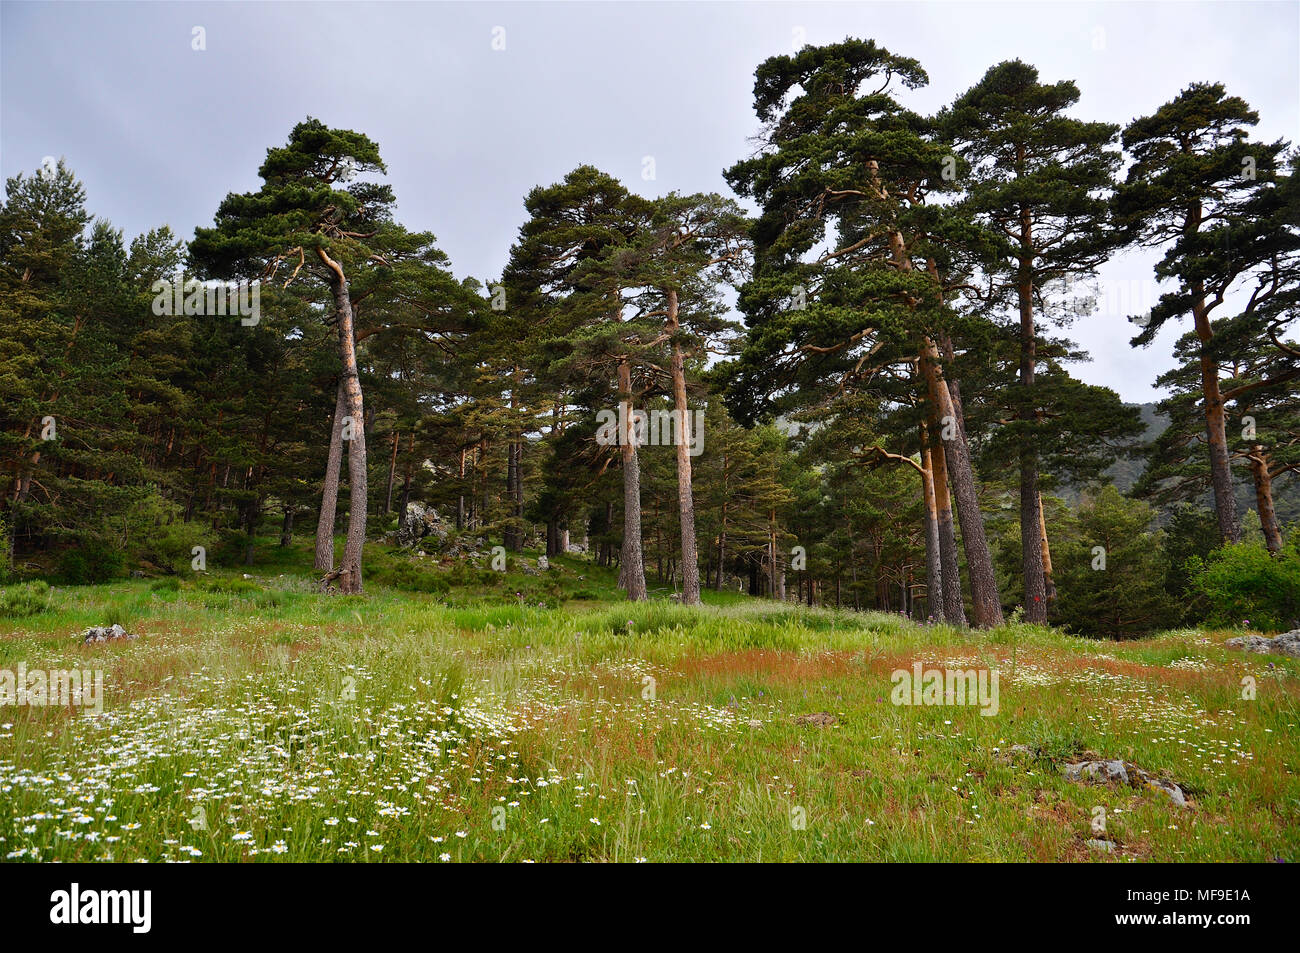 Group of Scots pines (Pinus sylvestris) along a green meadow in Fuenfría Valley (Guadarrama National Park, Comunidad de Madrid, Spain) Stock Photo